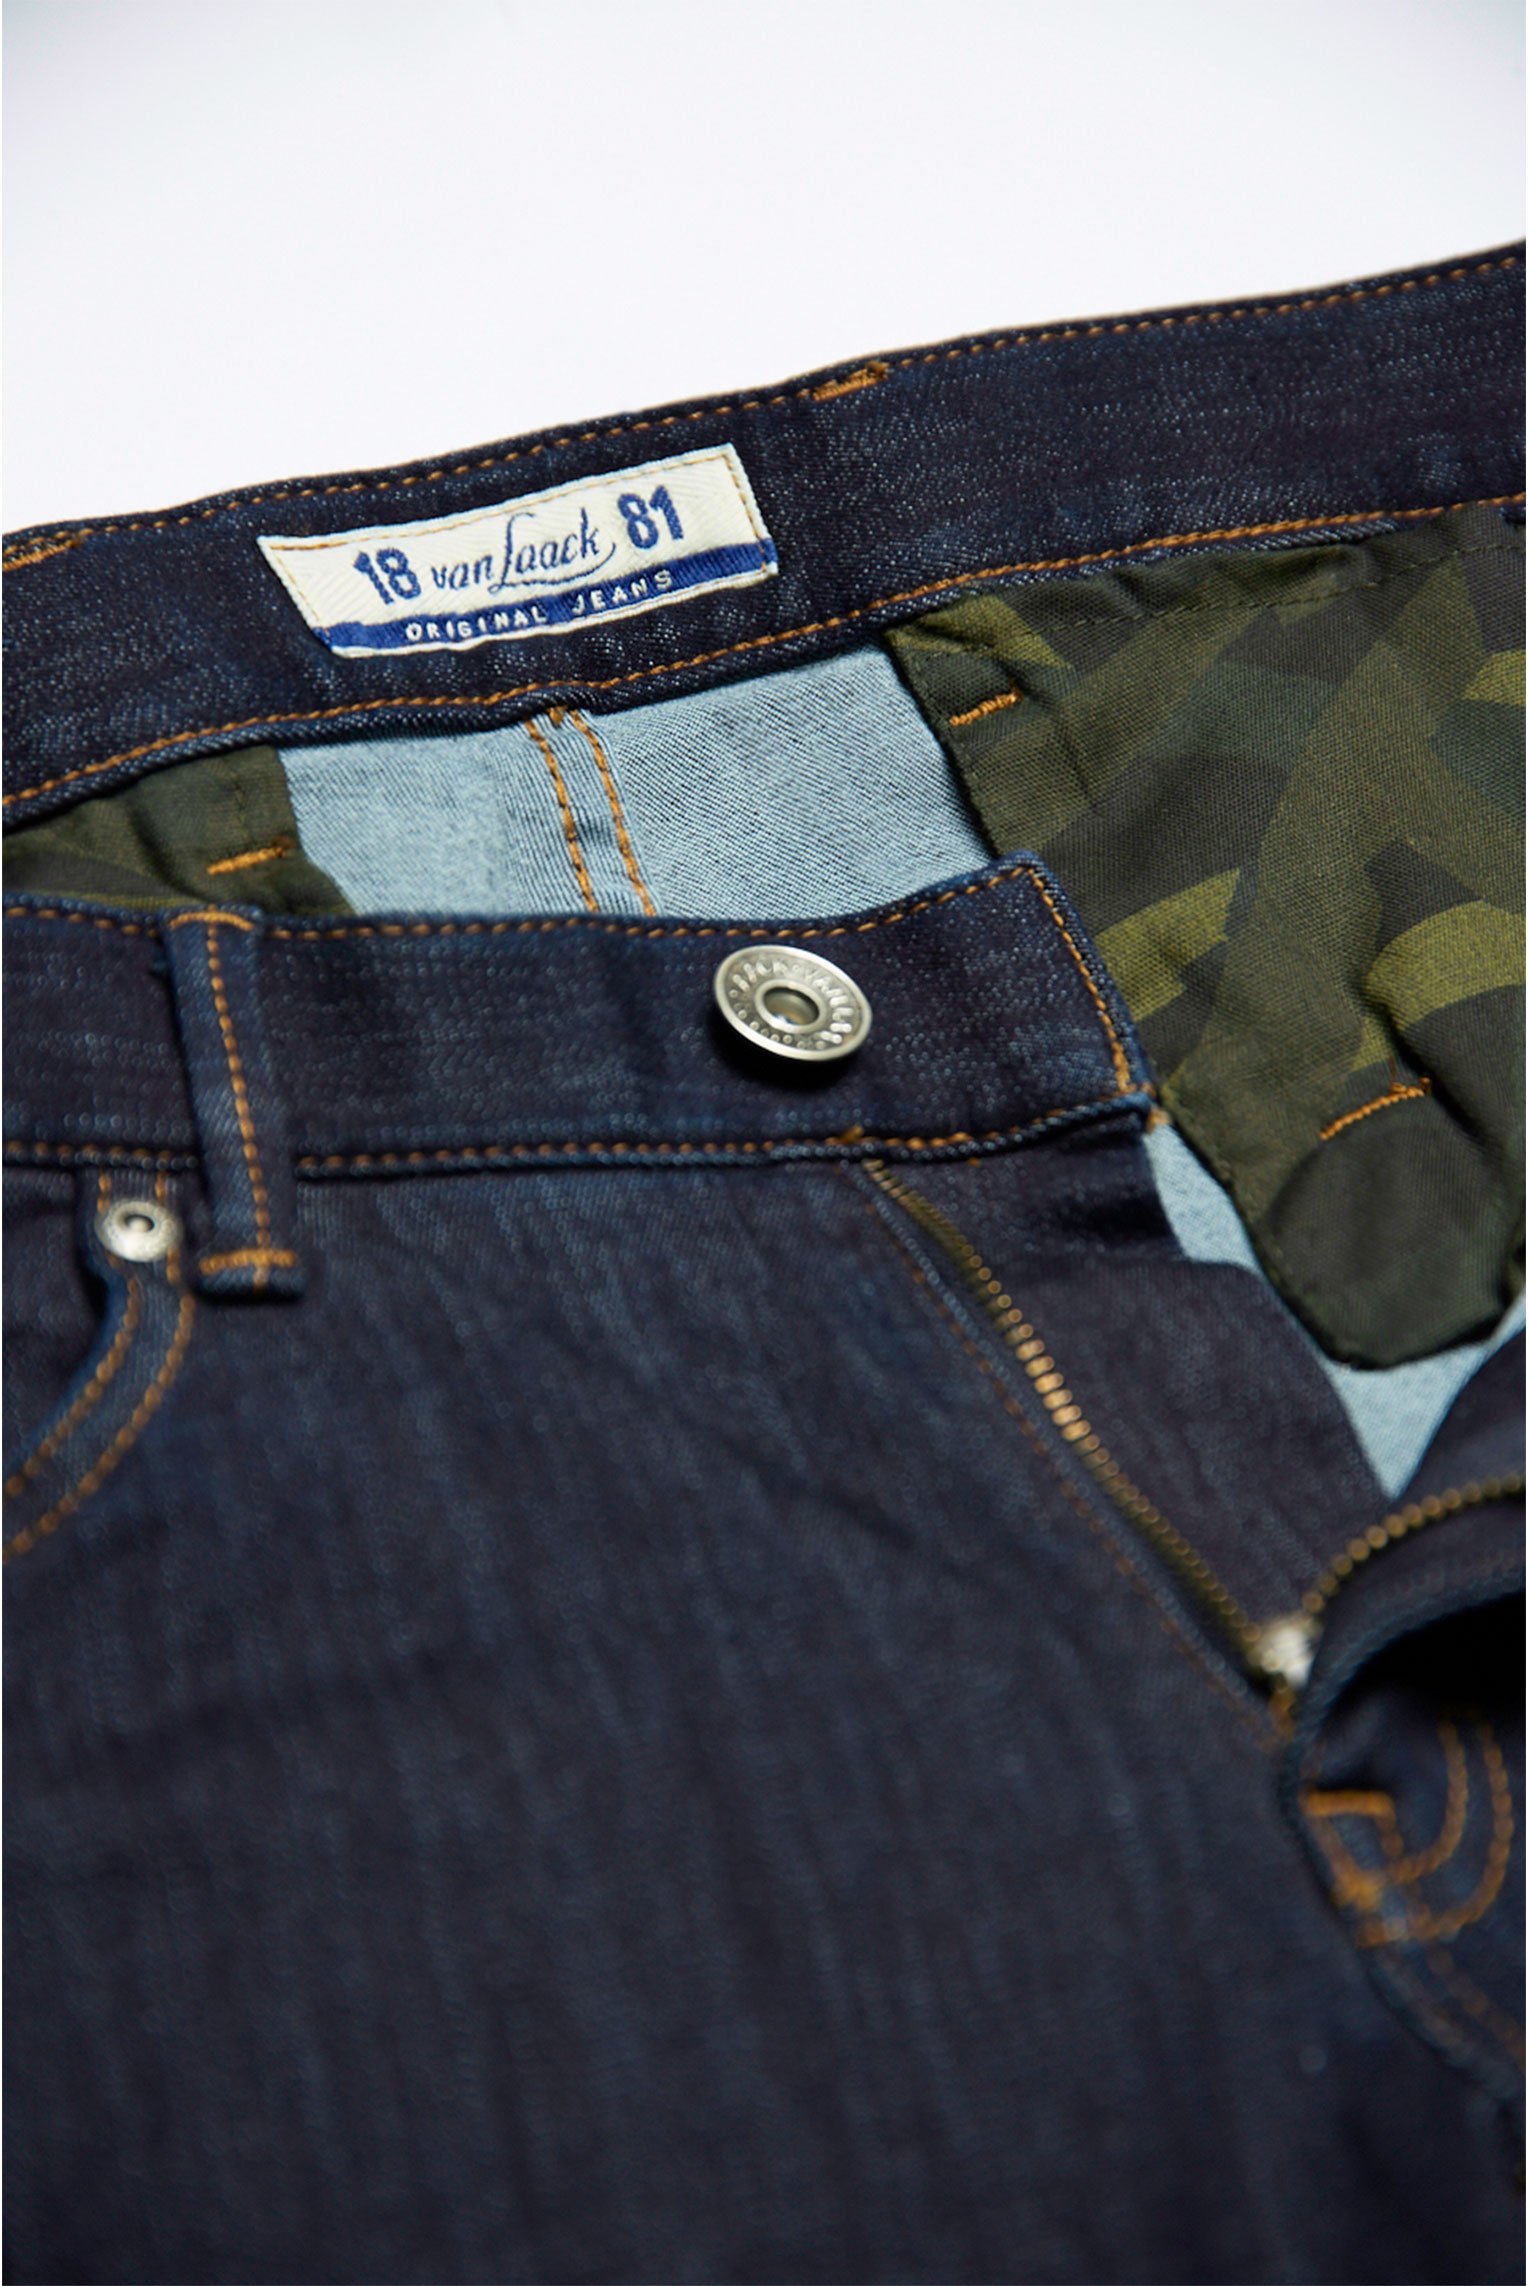 Jeans & Trousers+High Quality Mens Cotton Blend Slim Fit Jeans Trousers Dark Blue+80.7857..J00117.790.29L